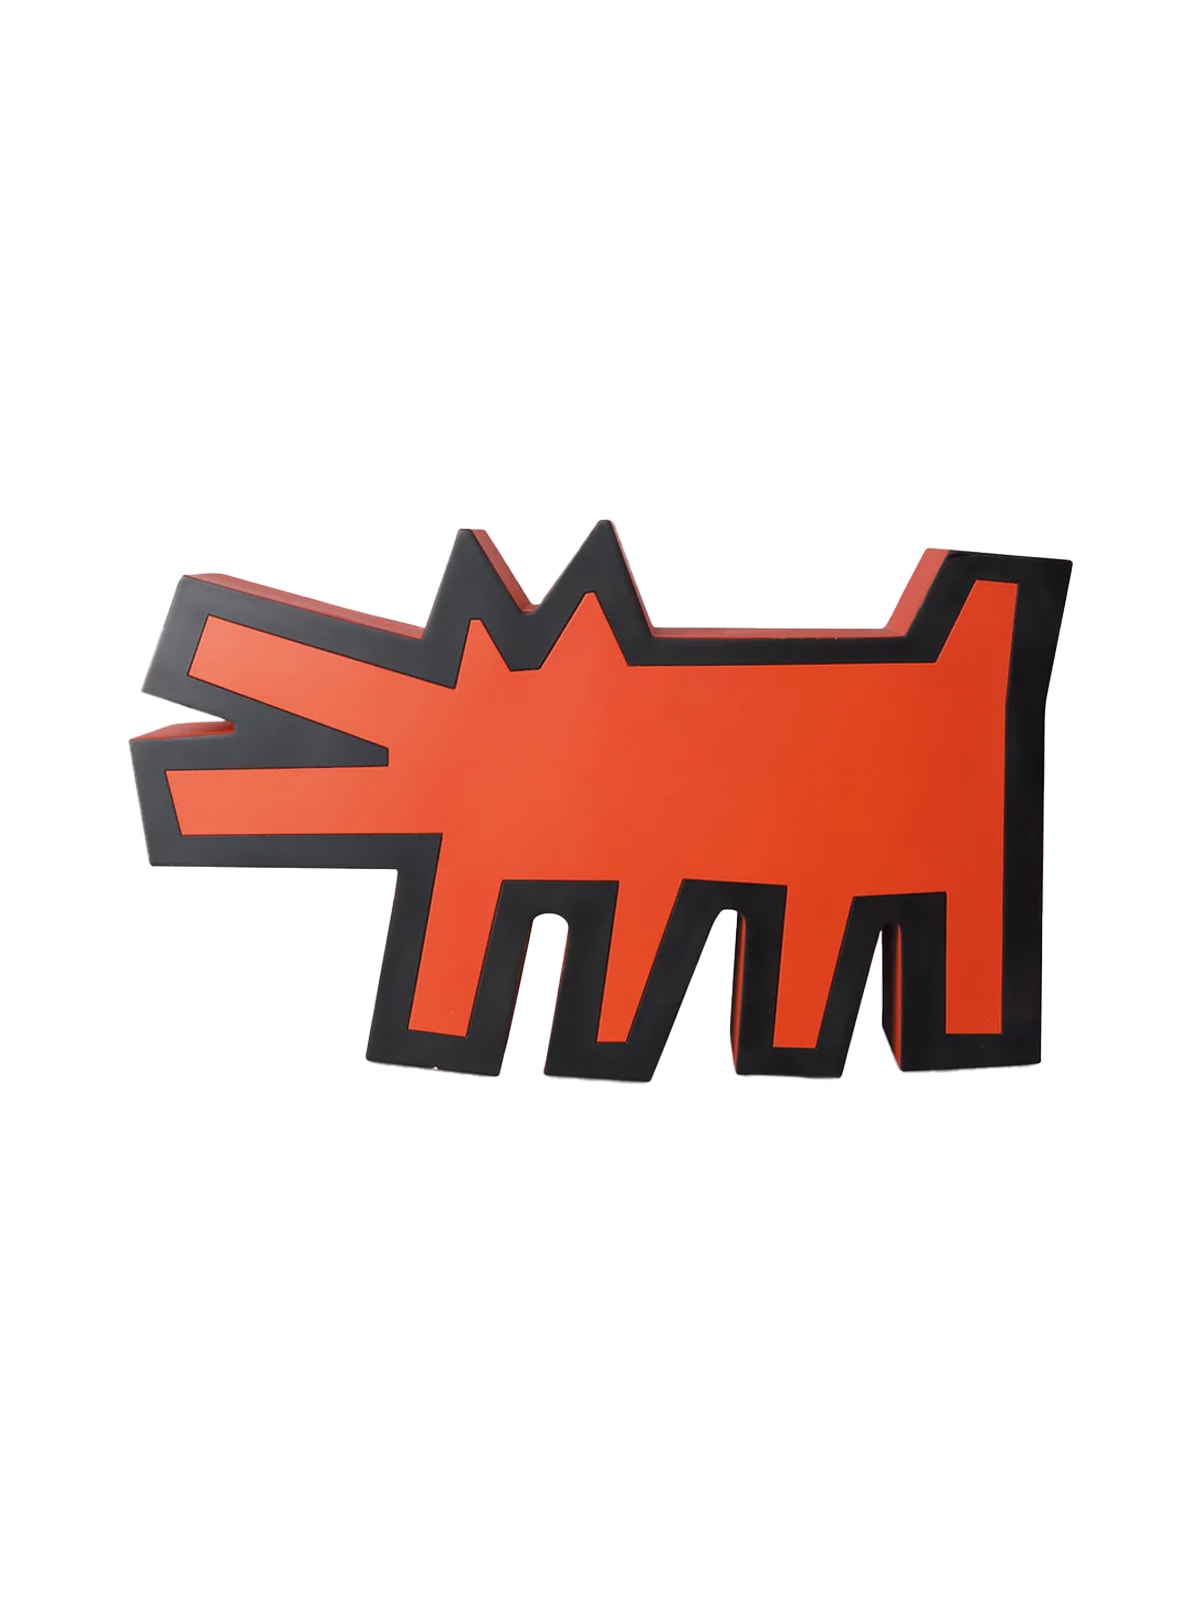 Medicom Toy Barkin Dog Statue Keith Haring